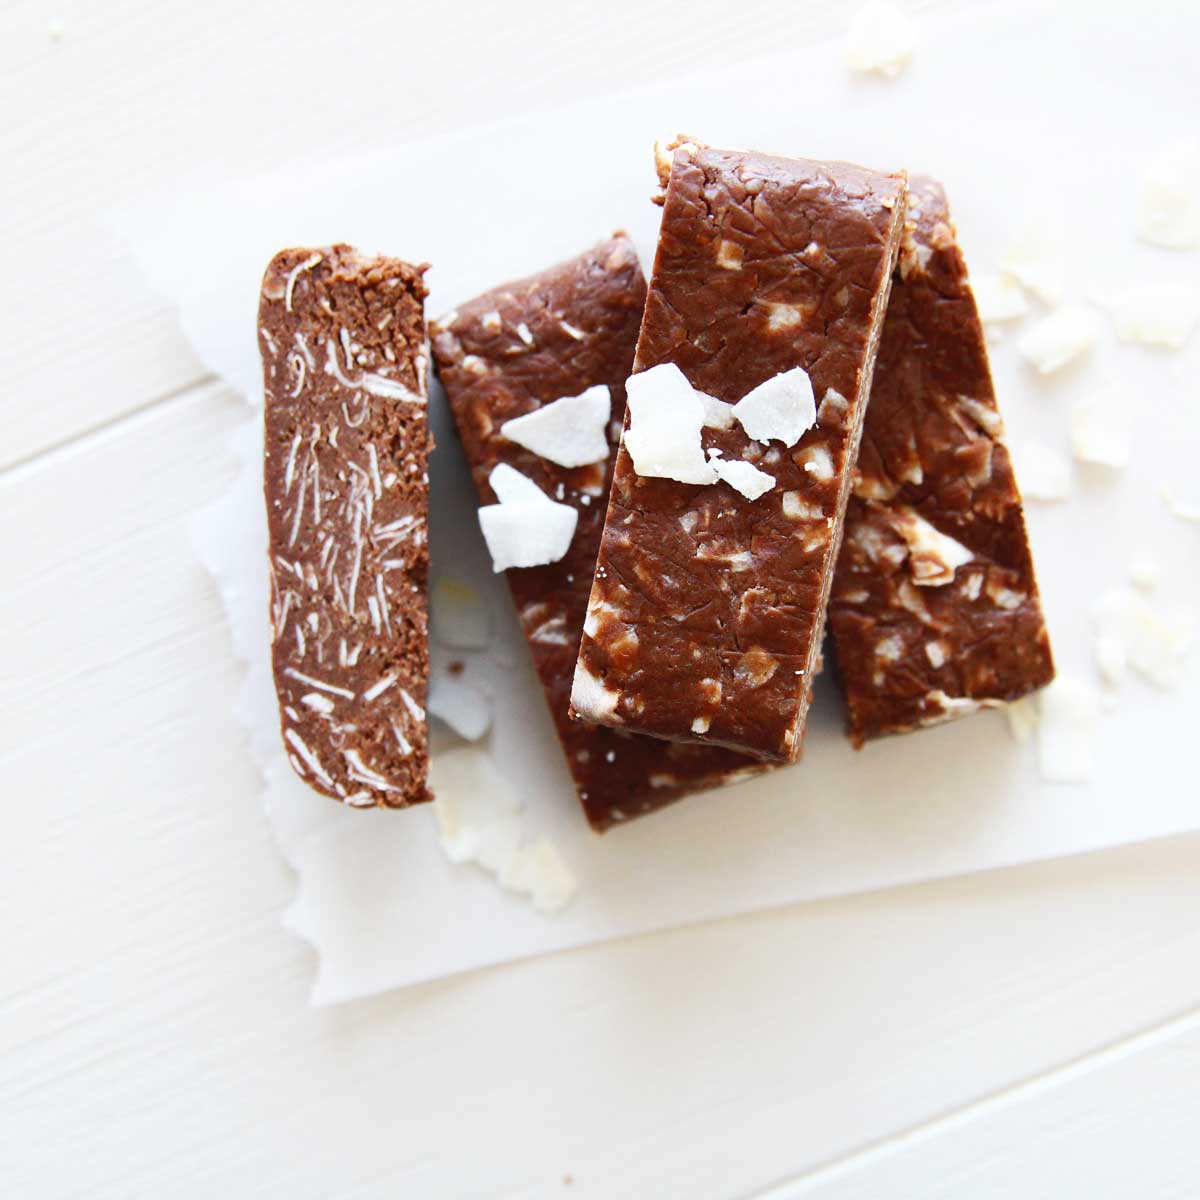 Vegan Coconut Chocolate "Almond Joy" Protein Bars Recipe - Vegan Chocolate Whipped Cream